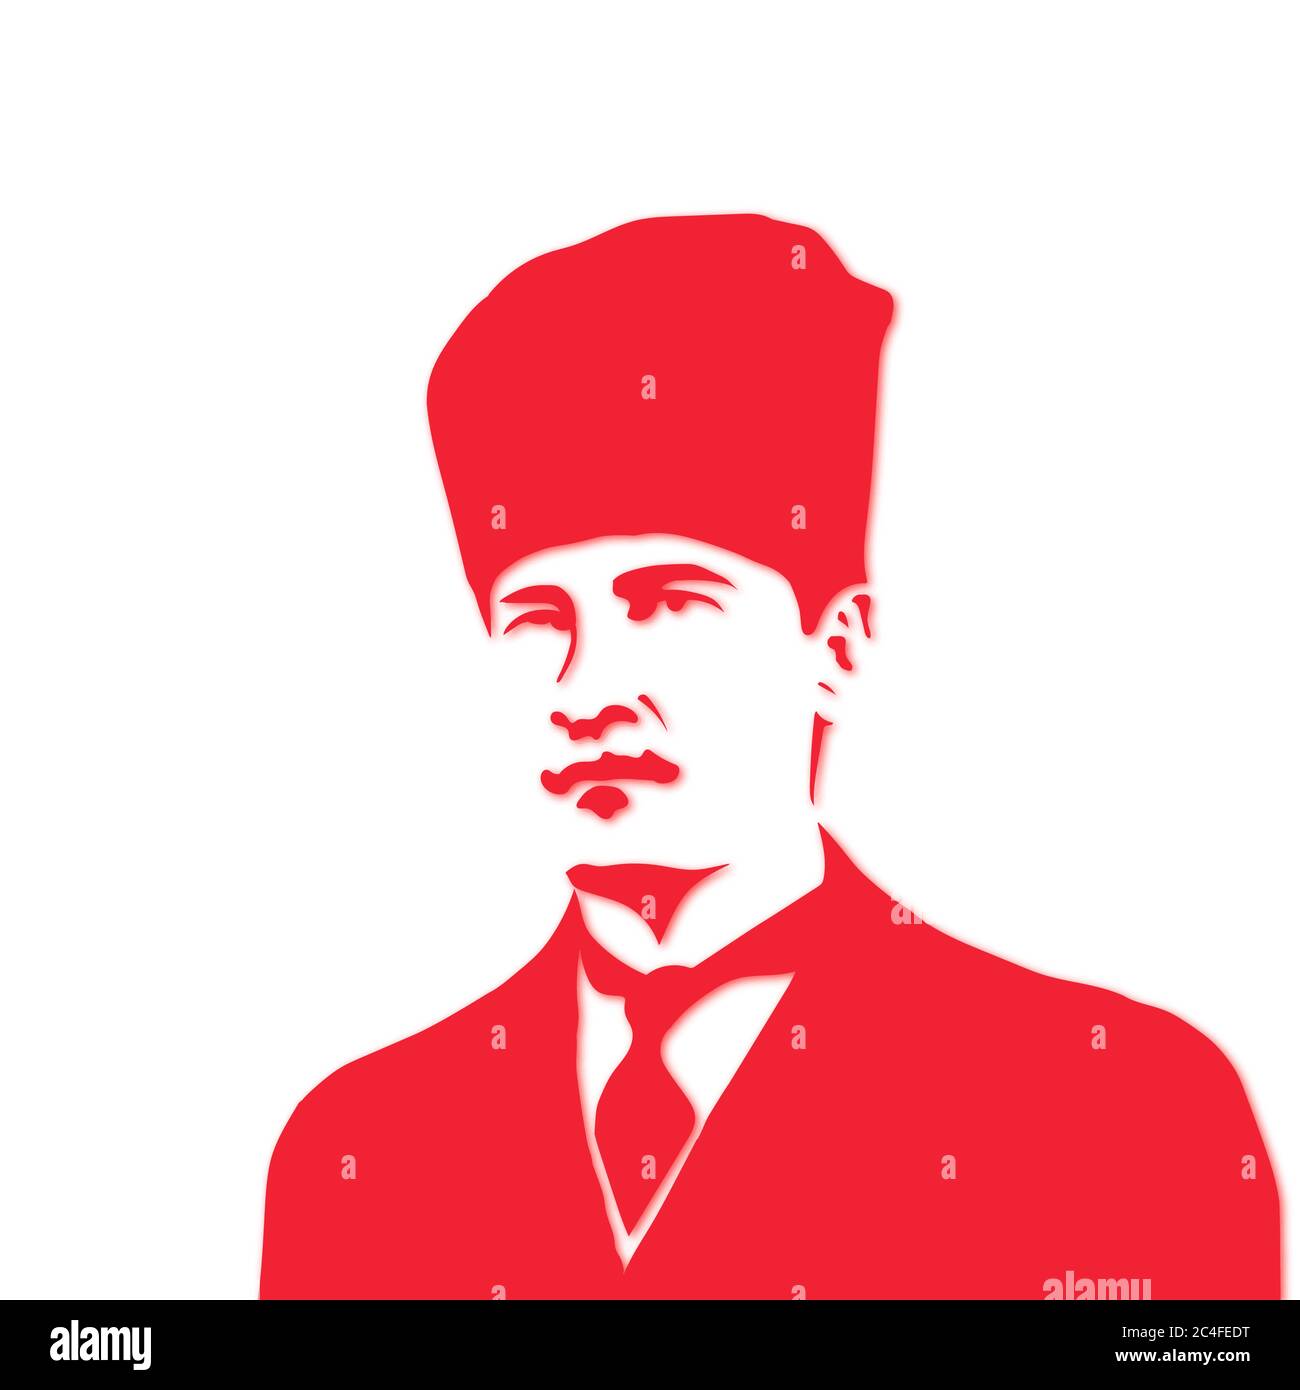 Vector Illustration of 29 ekim Cumhuriyet Bayrami means in english 29 october Republic Day Turkey. Mustafa Kemal Atatürk the first president of Turkey Stock Vector